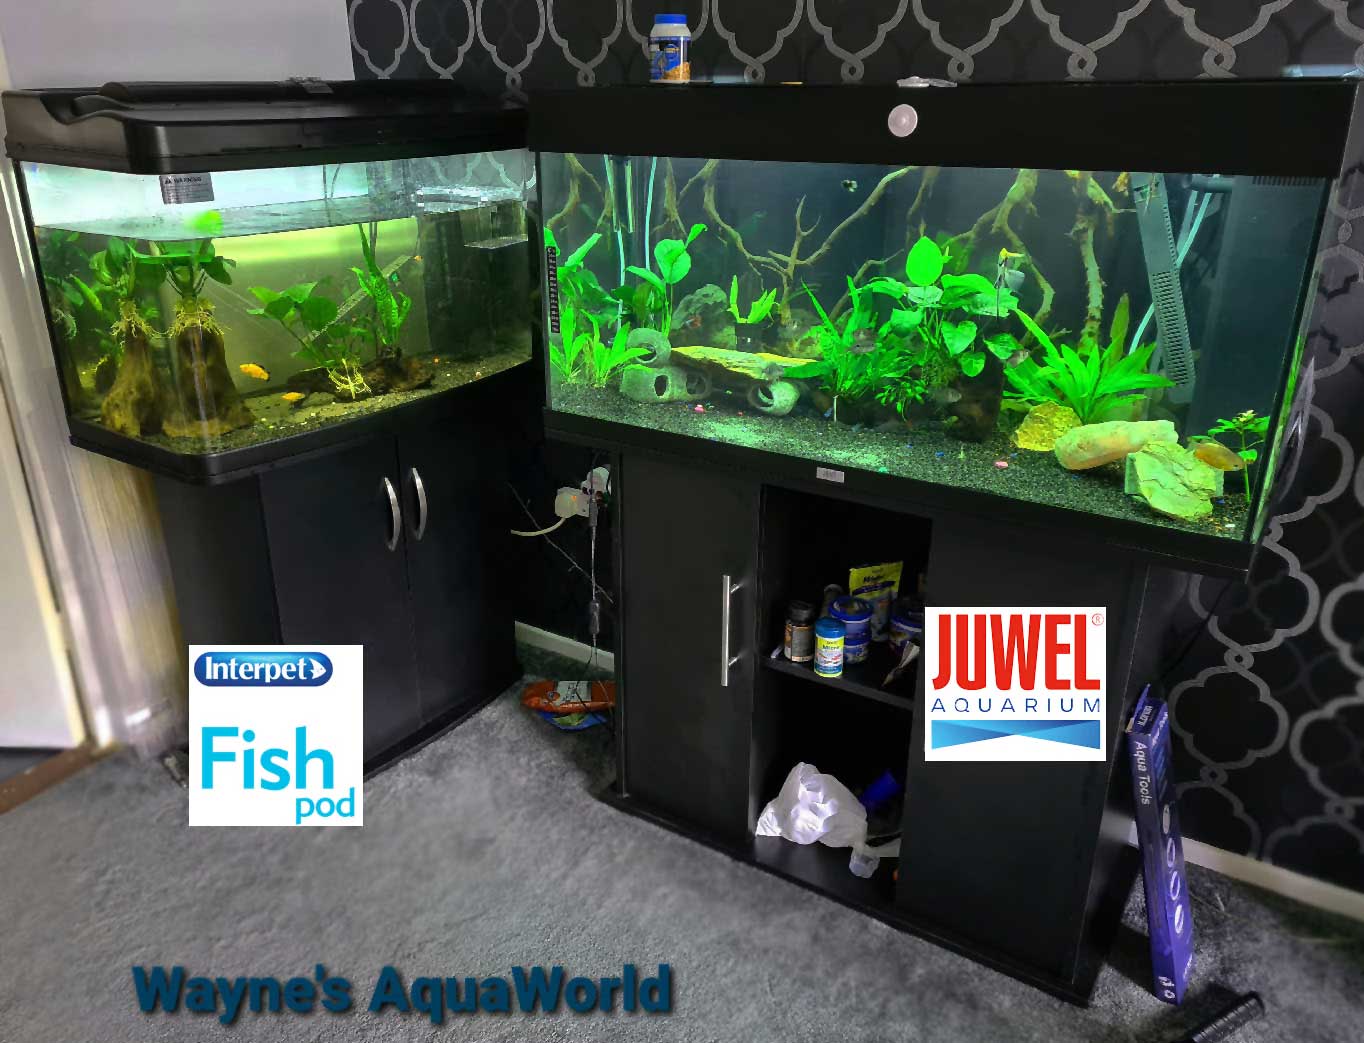 JUWEL RIO Tropical Aquarium Fish Tank and cabinet. Wayne's AquaWorld